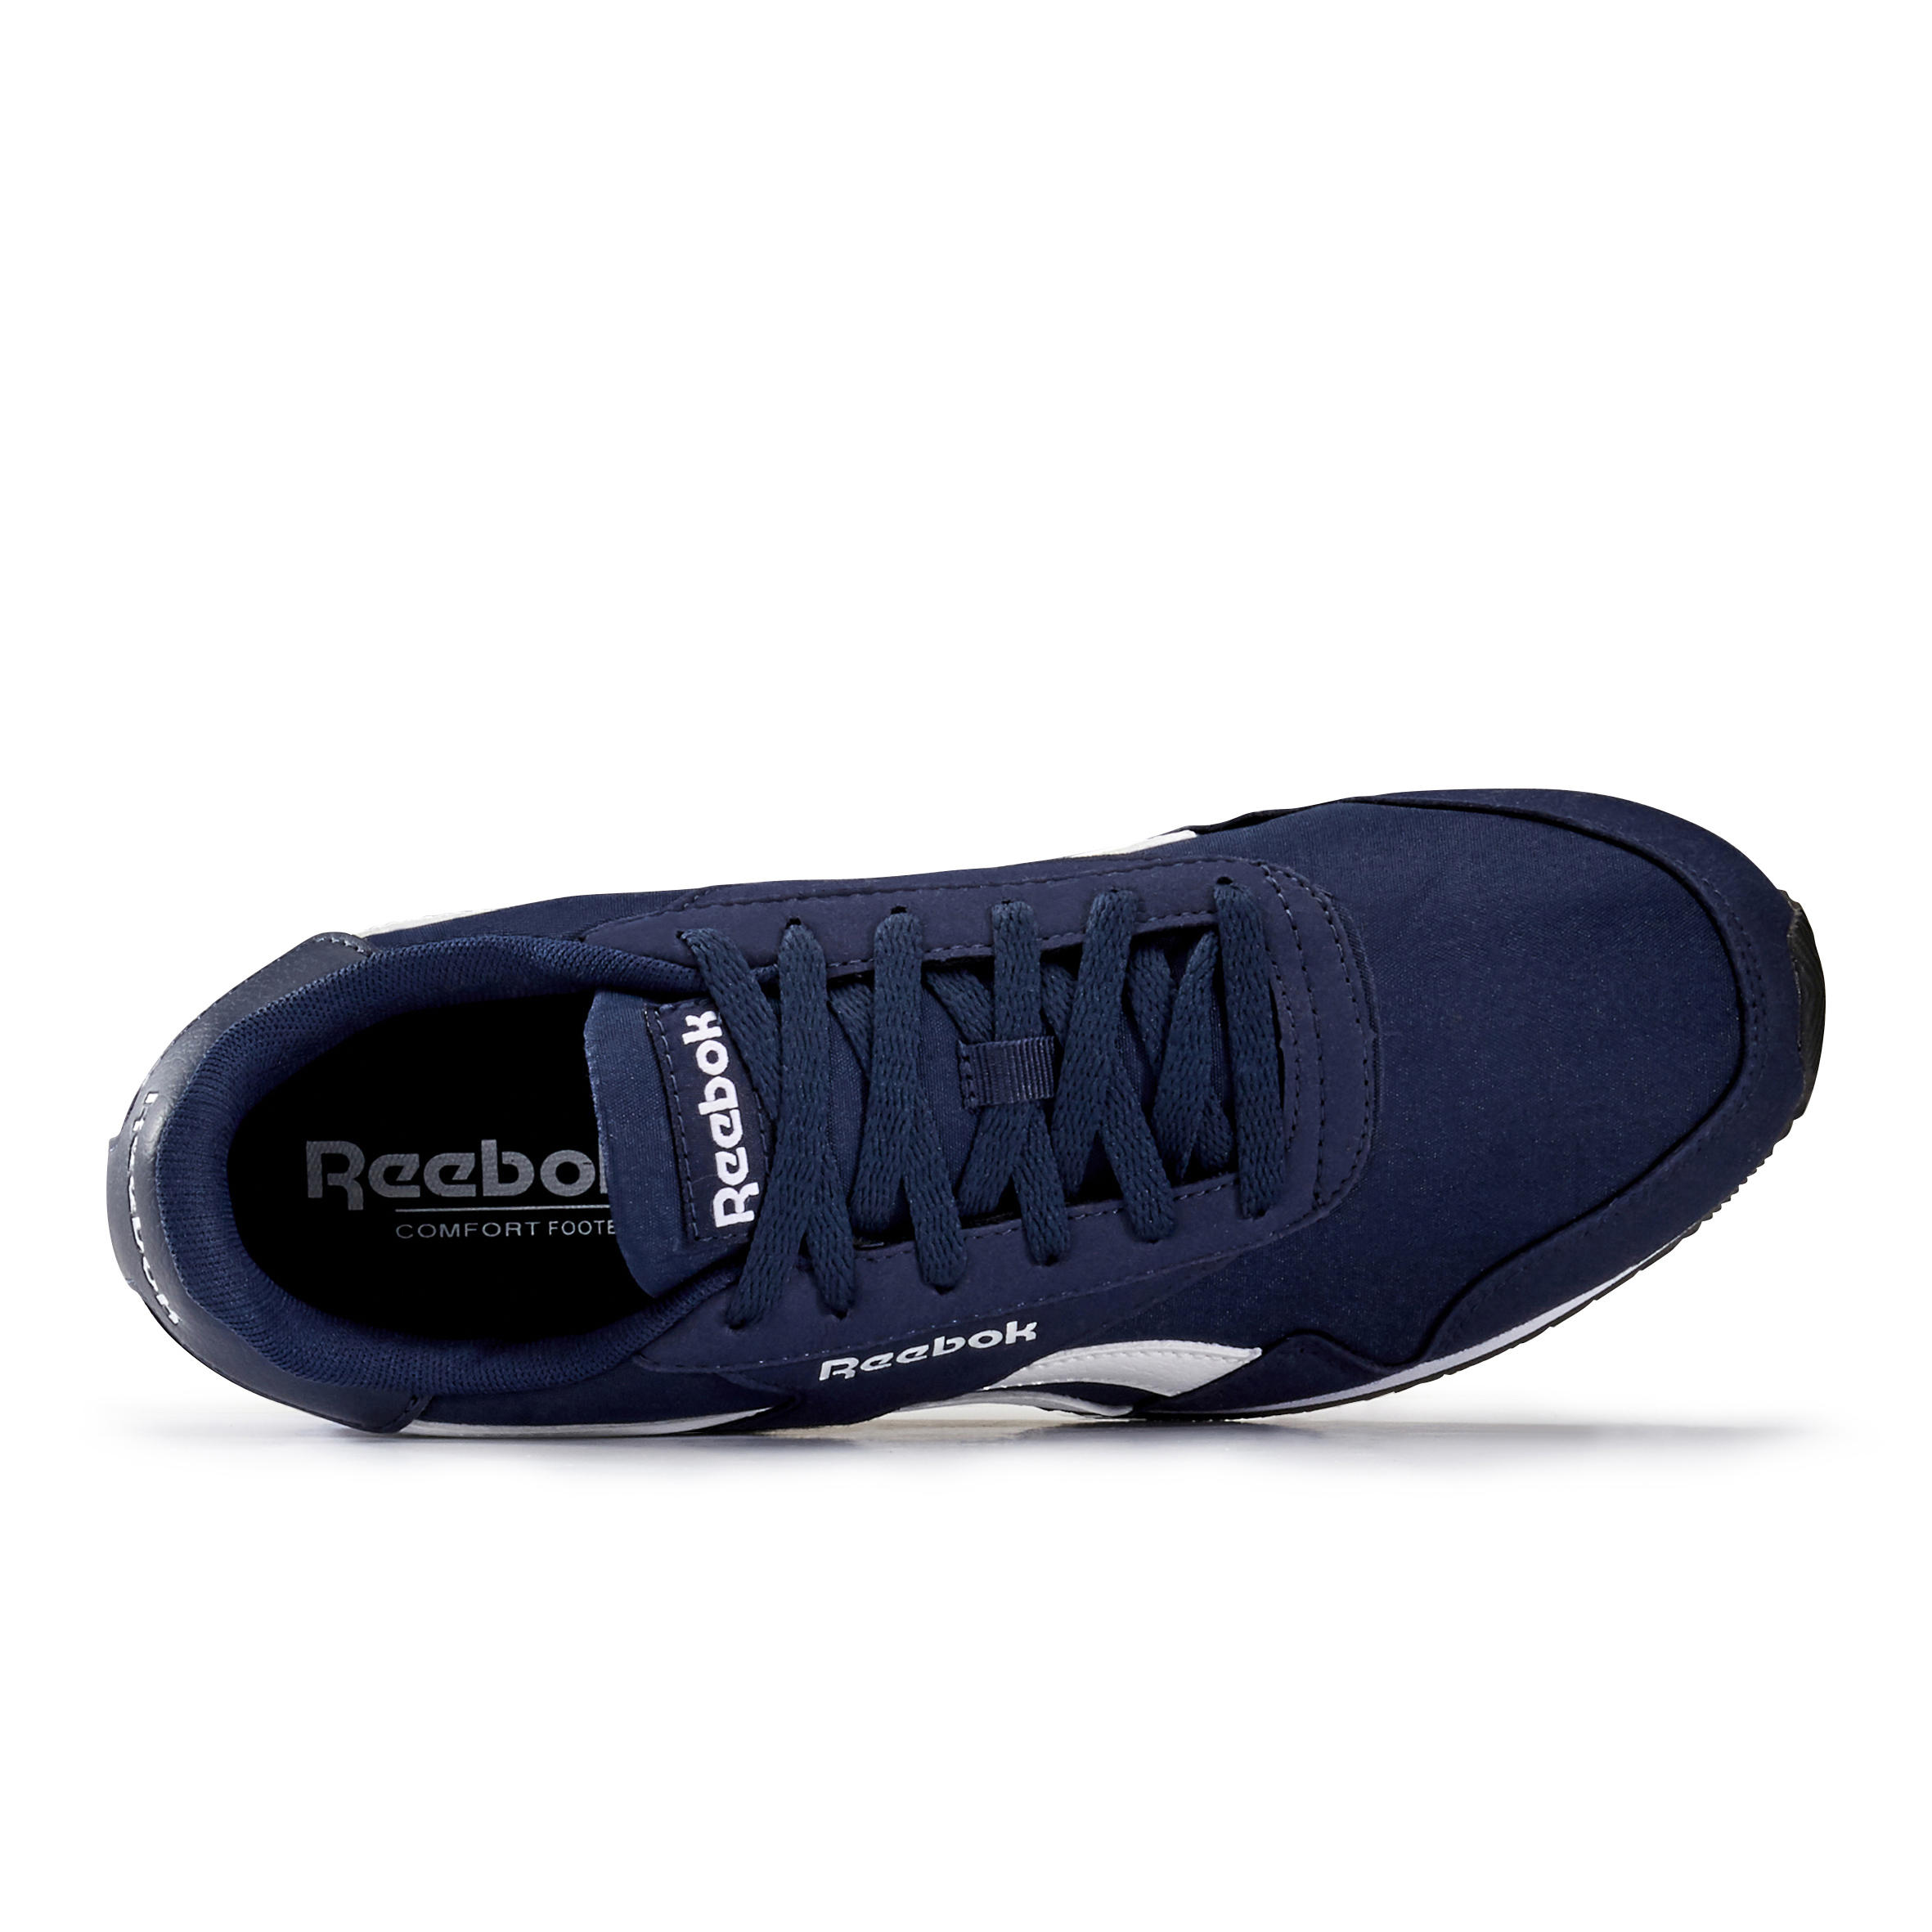 Men's Urban Walking Shoes Reebok Royal Classic - blue 4/8